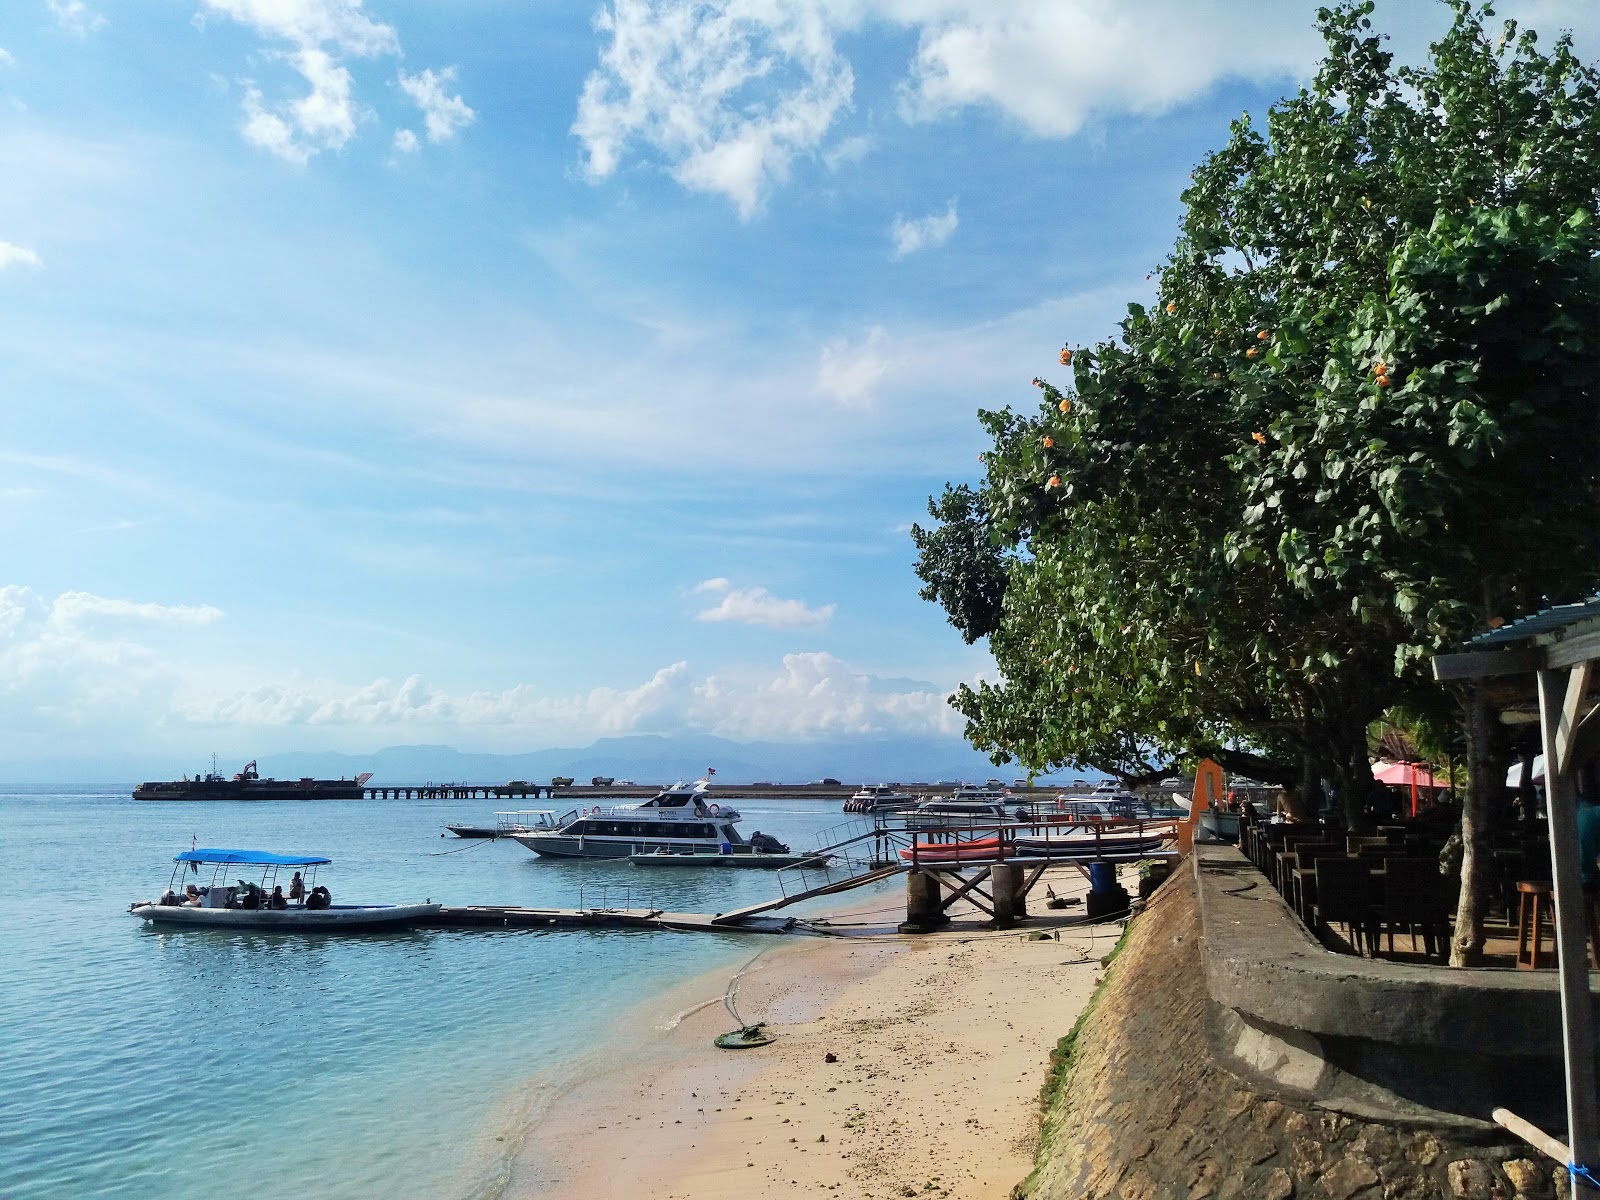 Foto de Toya Paken Beach - lugar popular entre os apreciadores de relaxamento